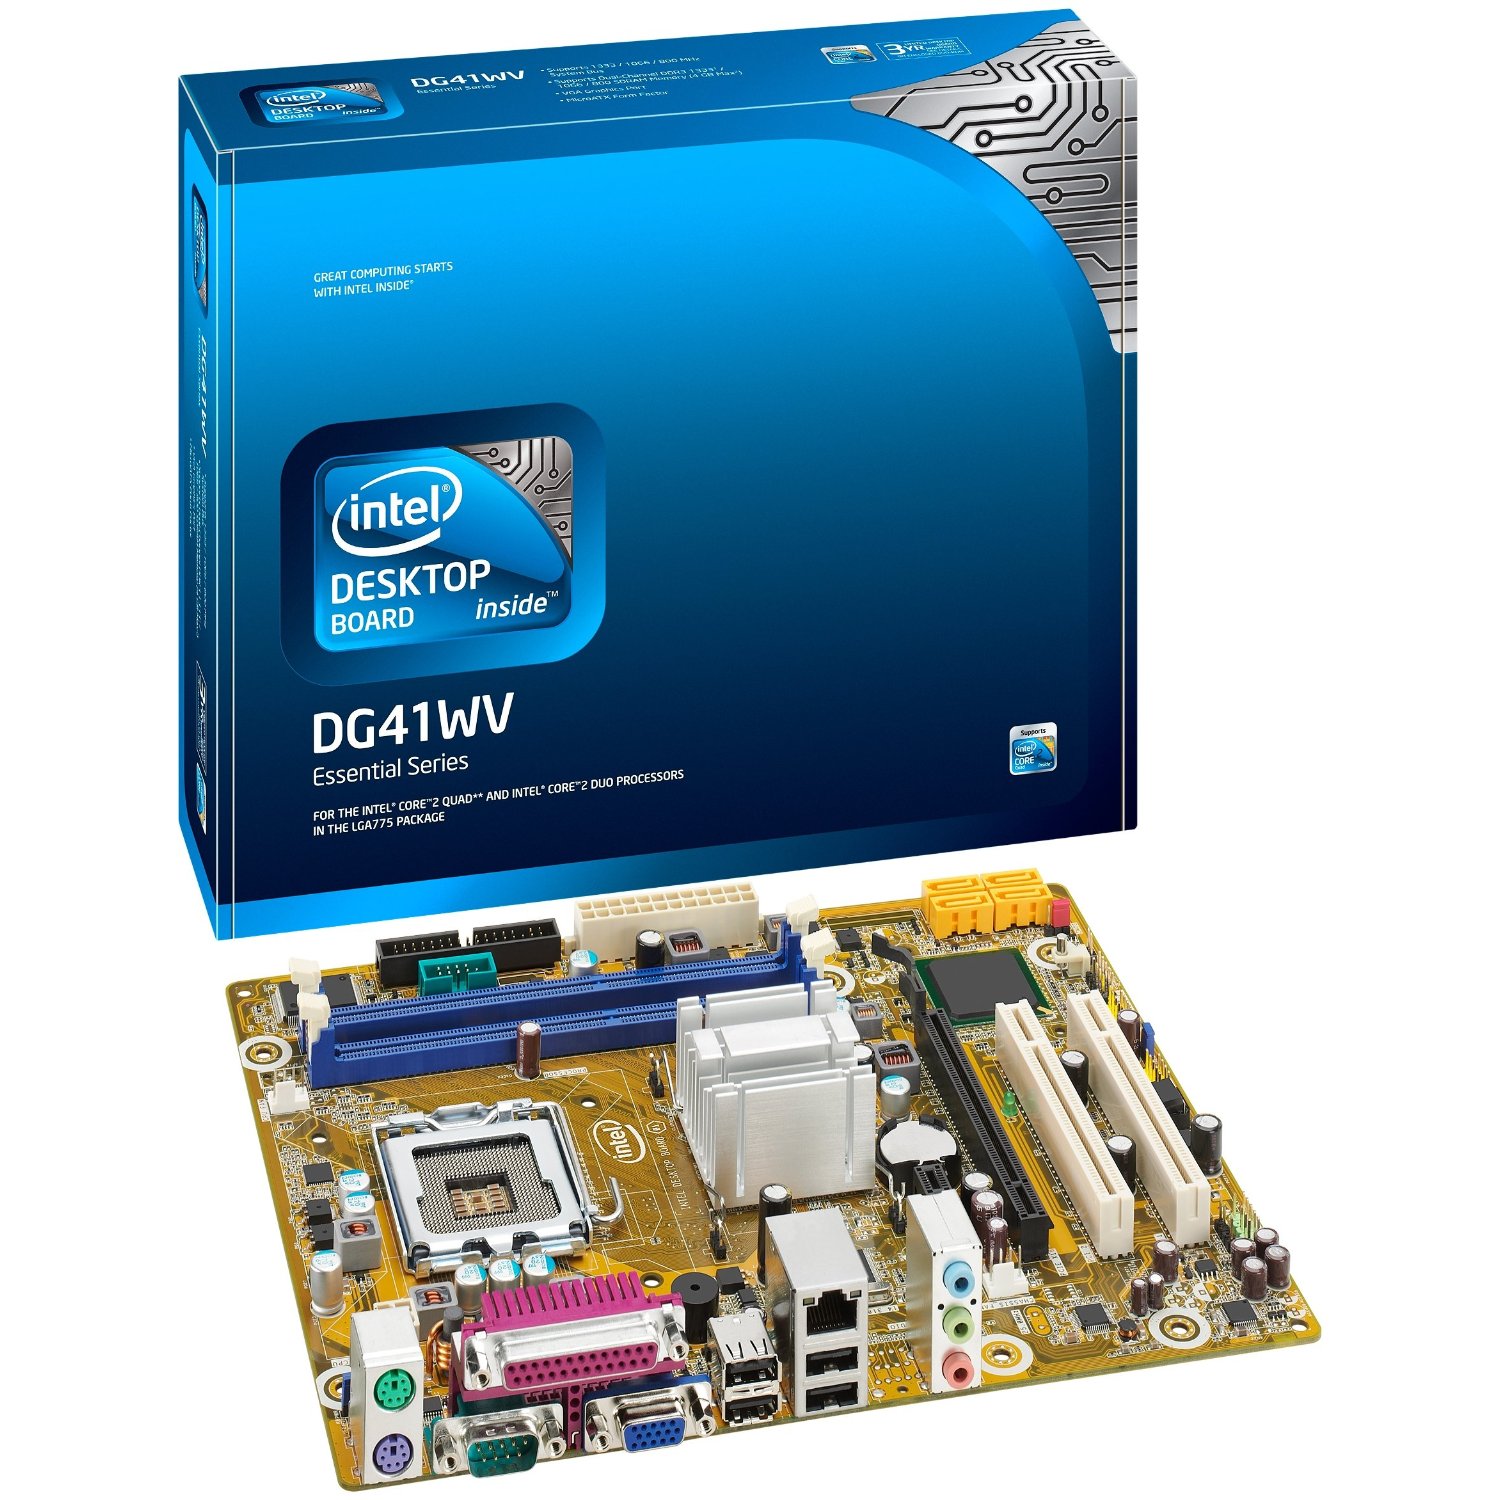 Intel BLKDG41WV LGA 775 Intel G41 Micro ATX Intel Motherboard